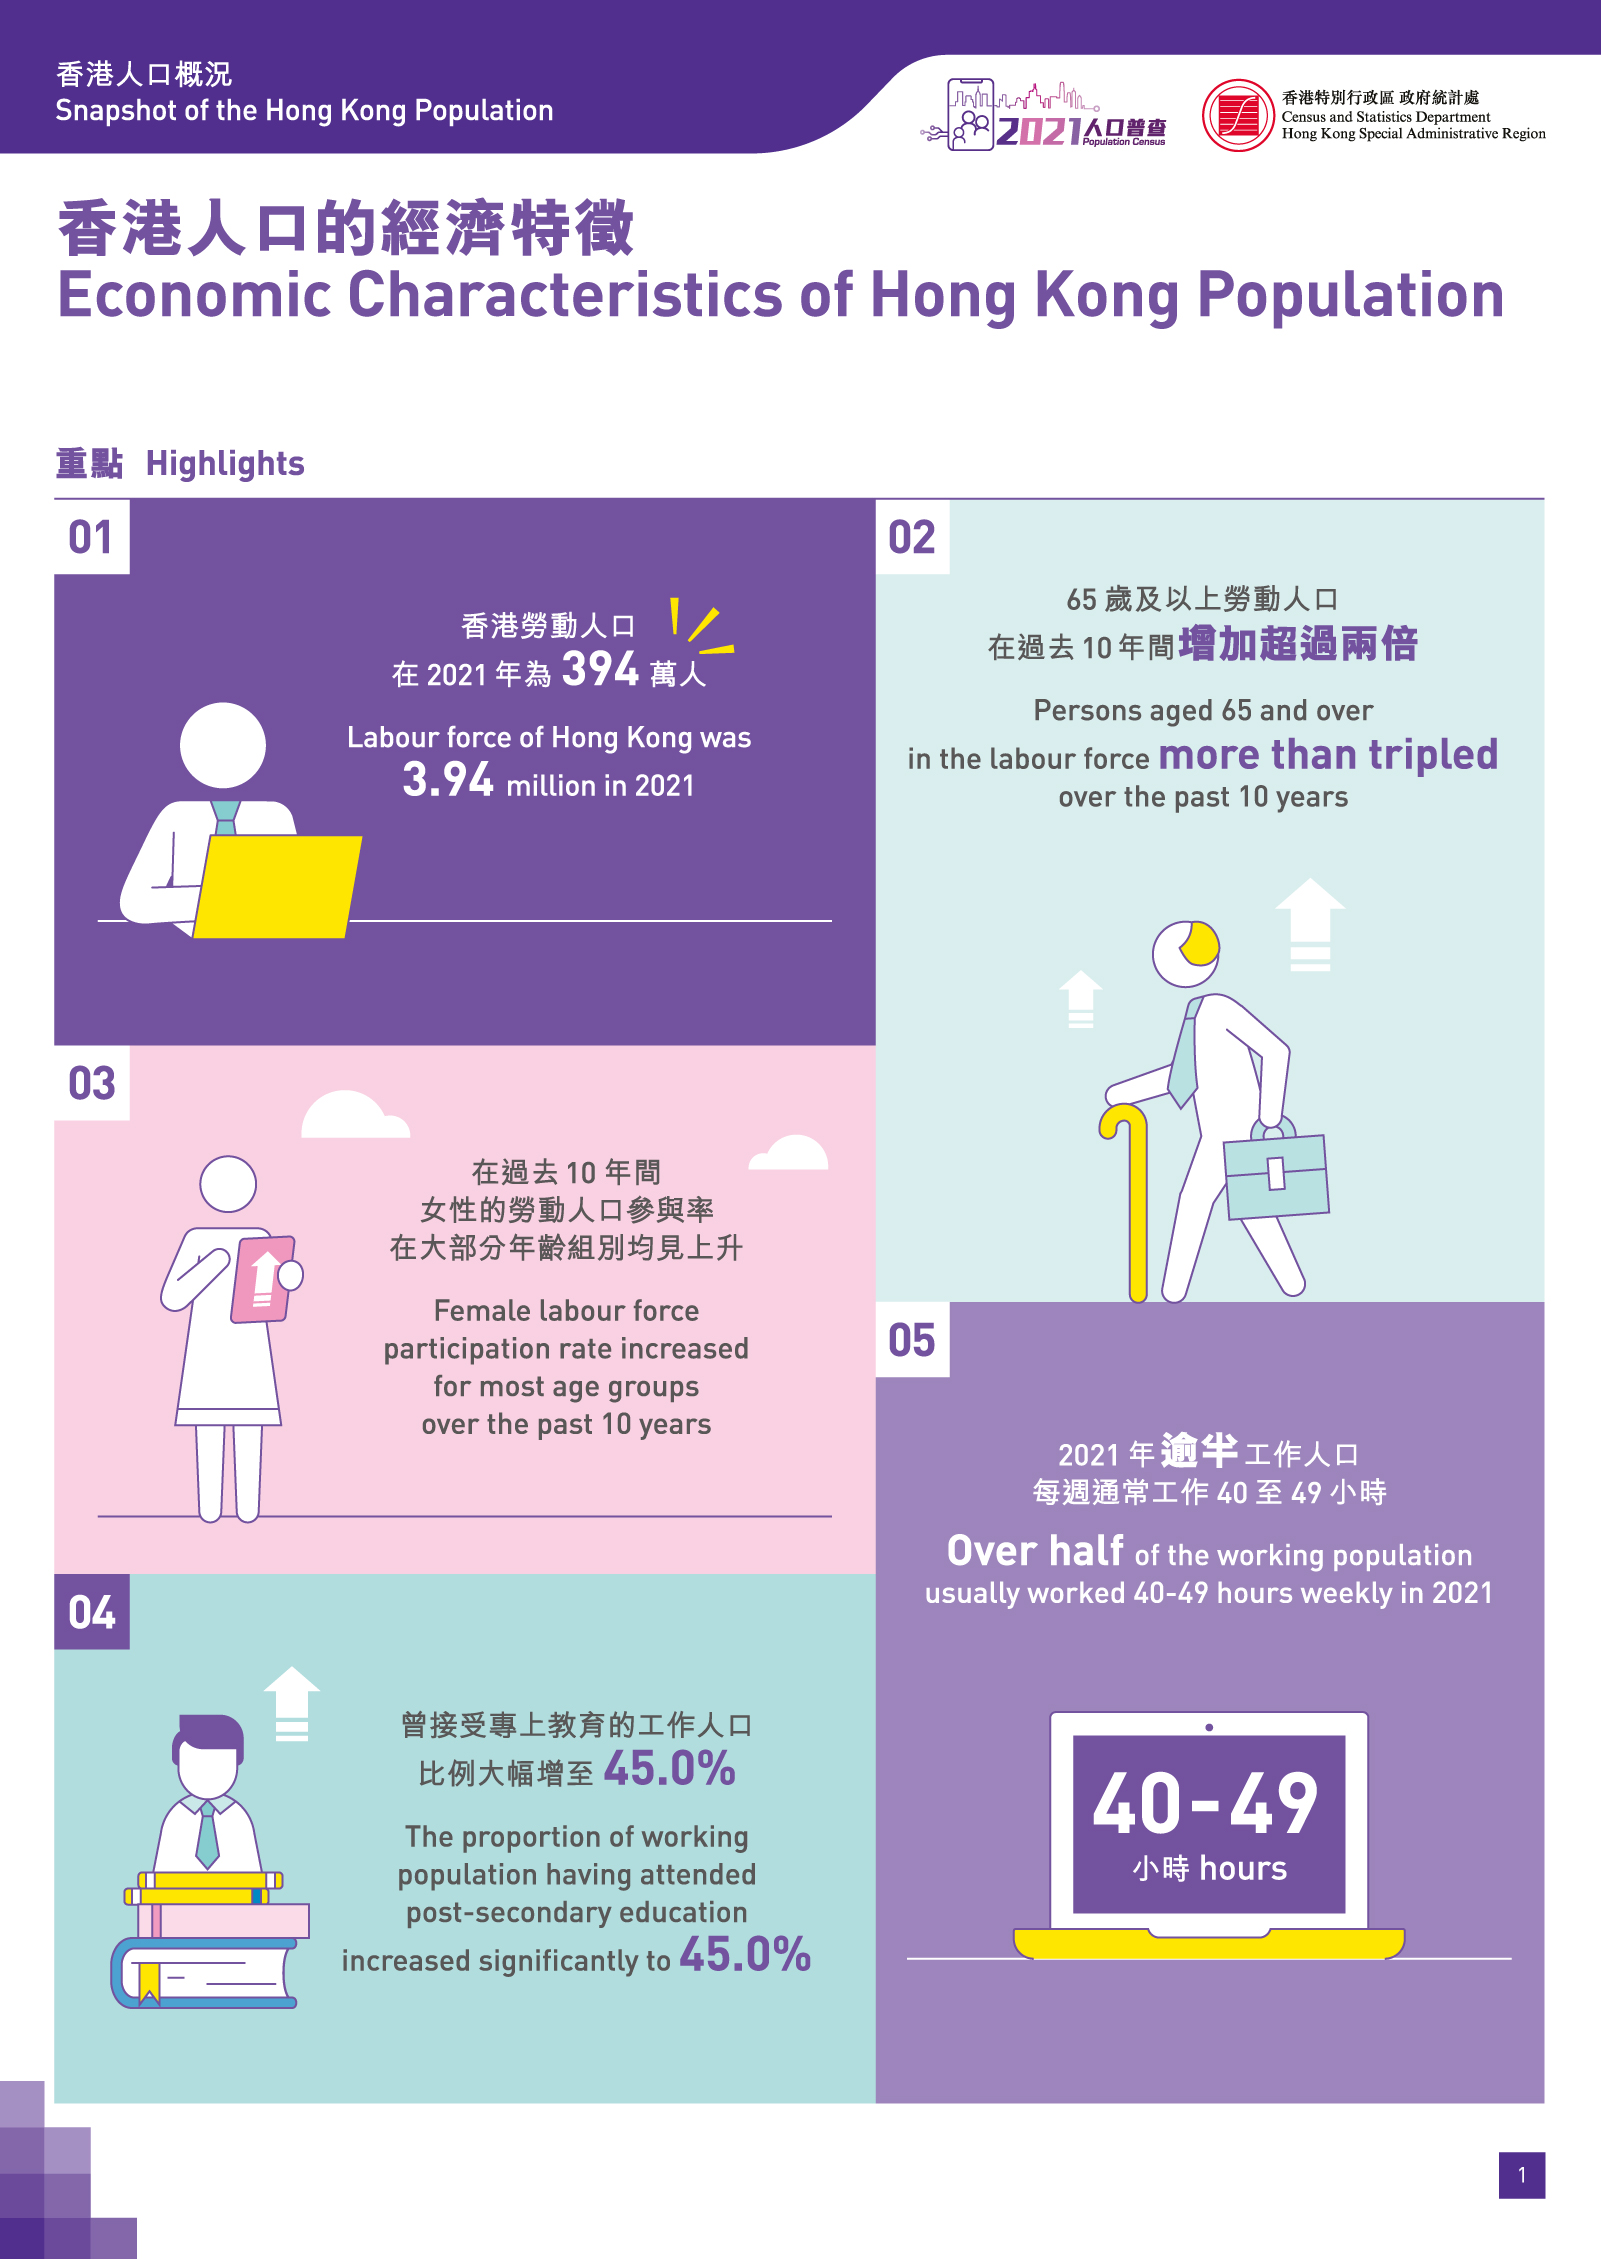 Economic Characteristics of Hong Kong Population